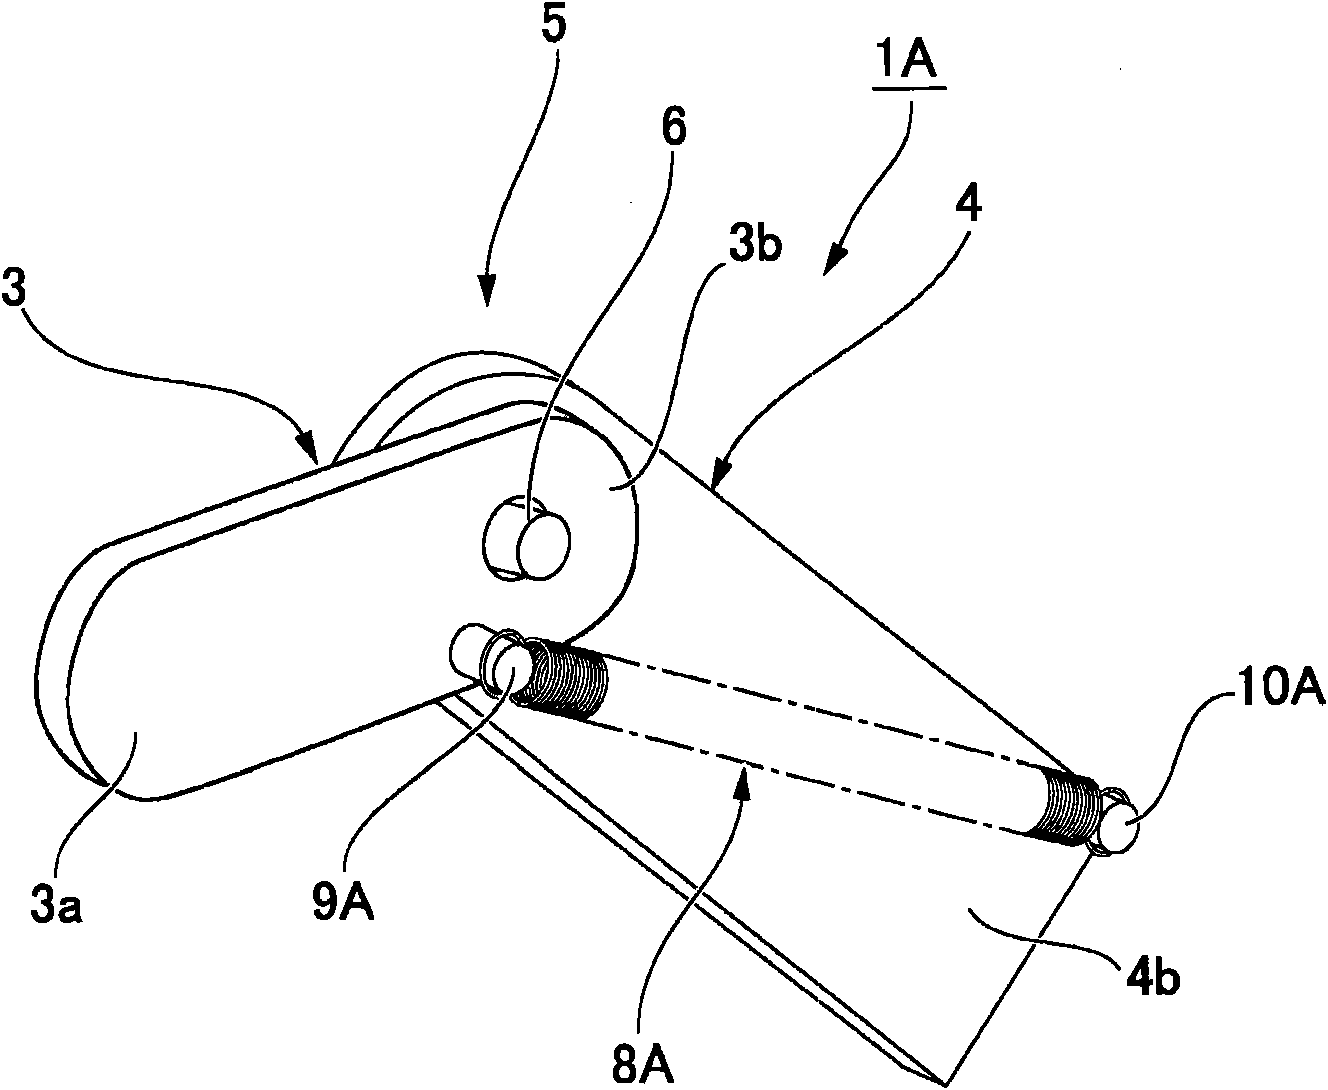 Finger mechanism of robot hand